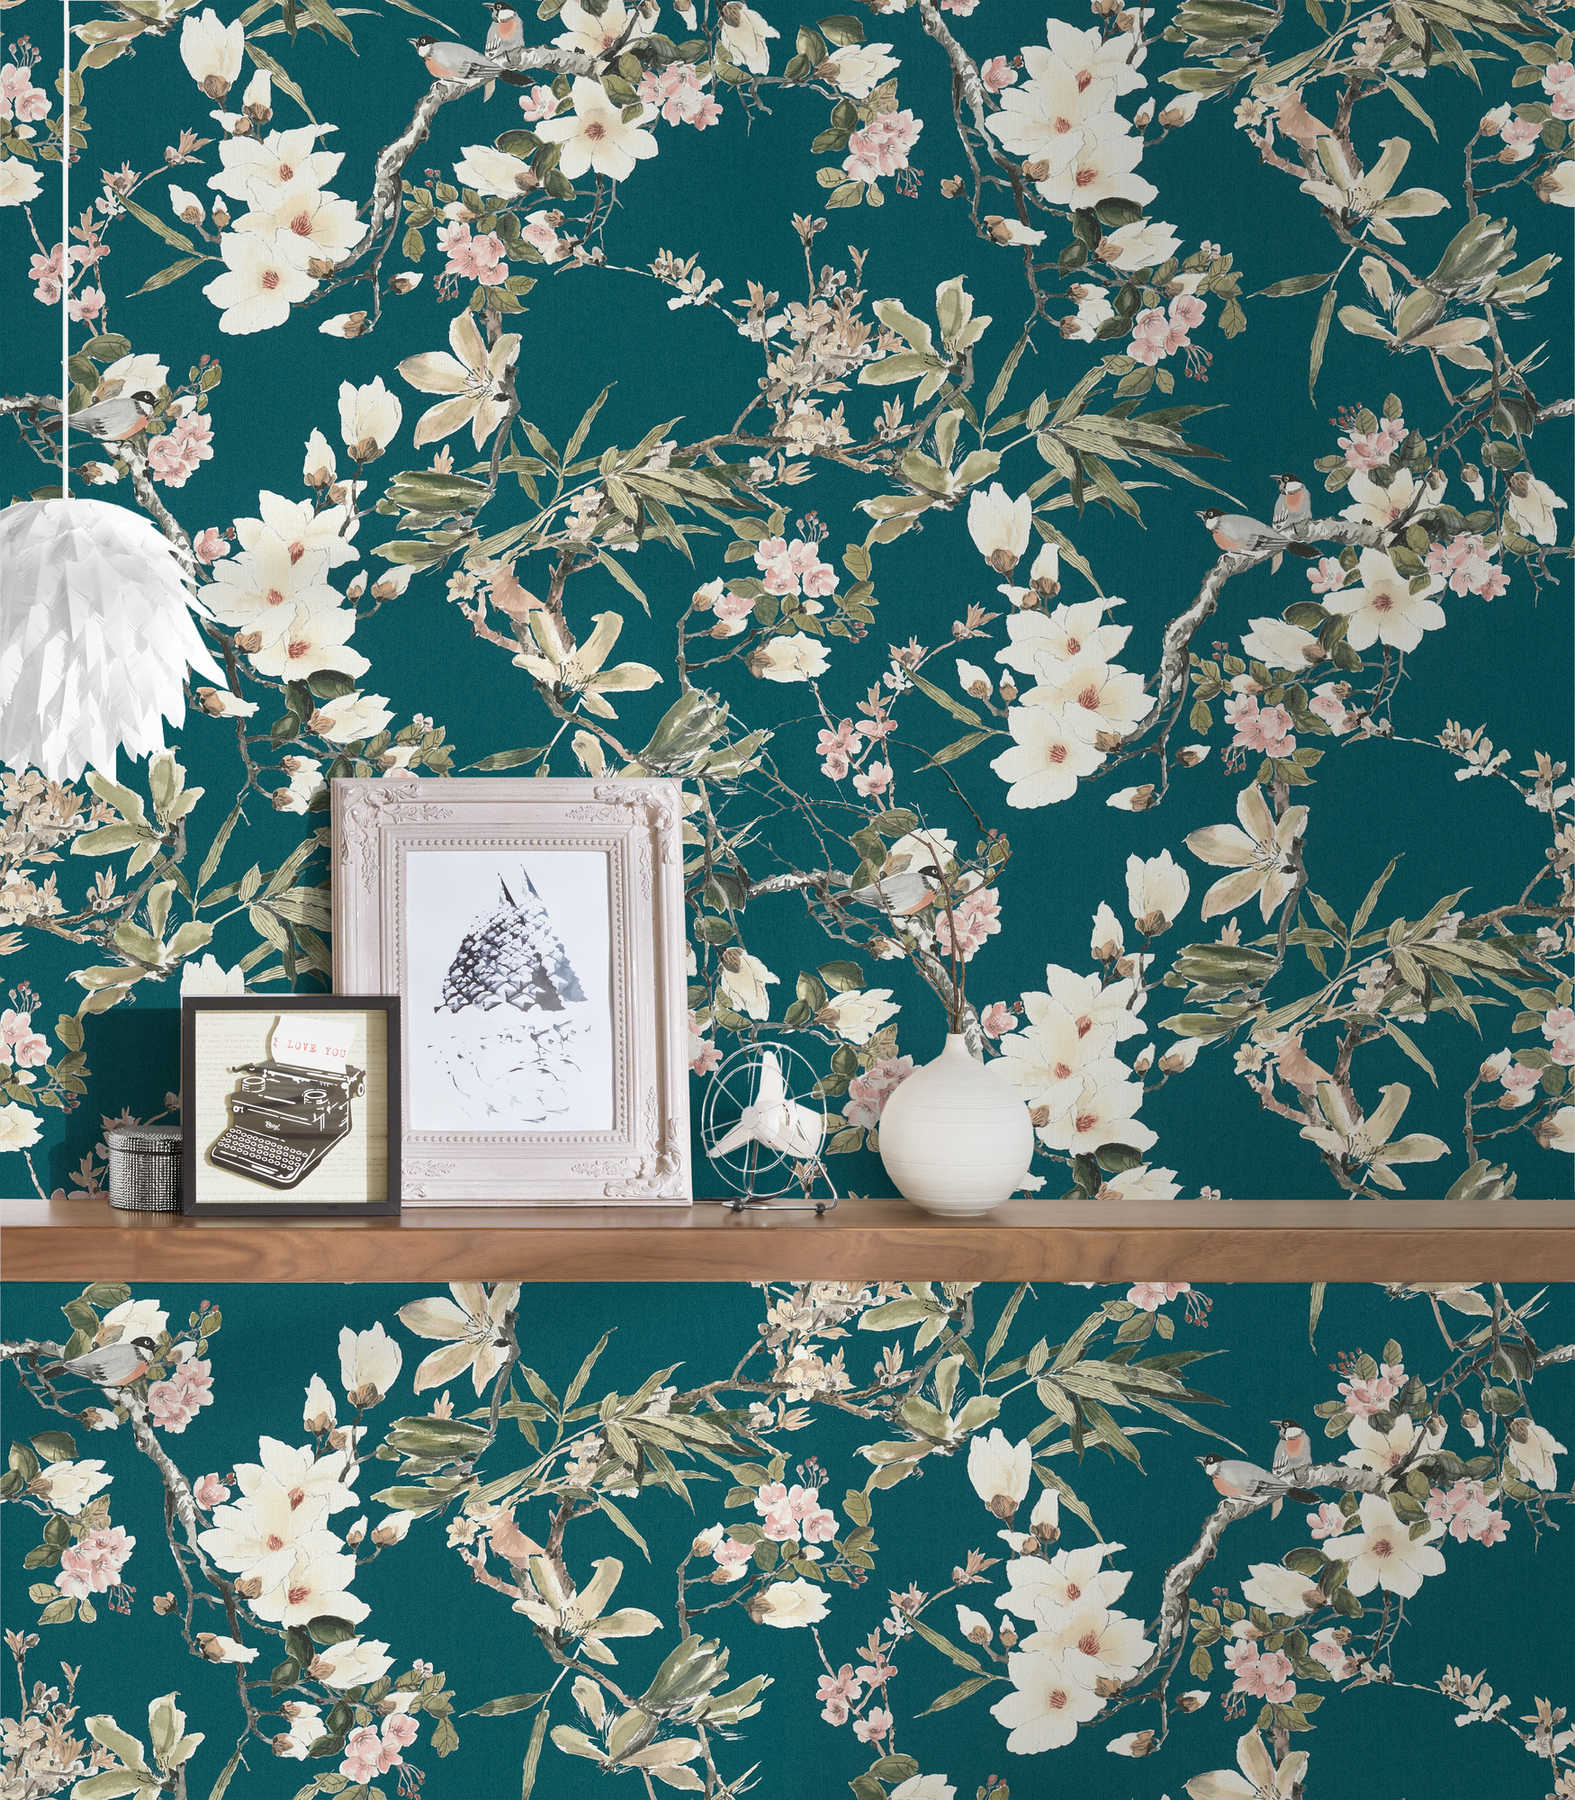             Non-woven wallpaper nature design flowers branches & birds - blue, green
        